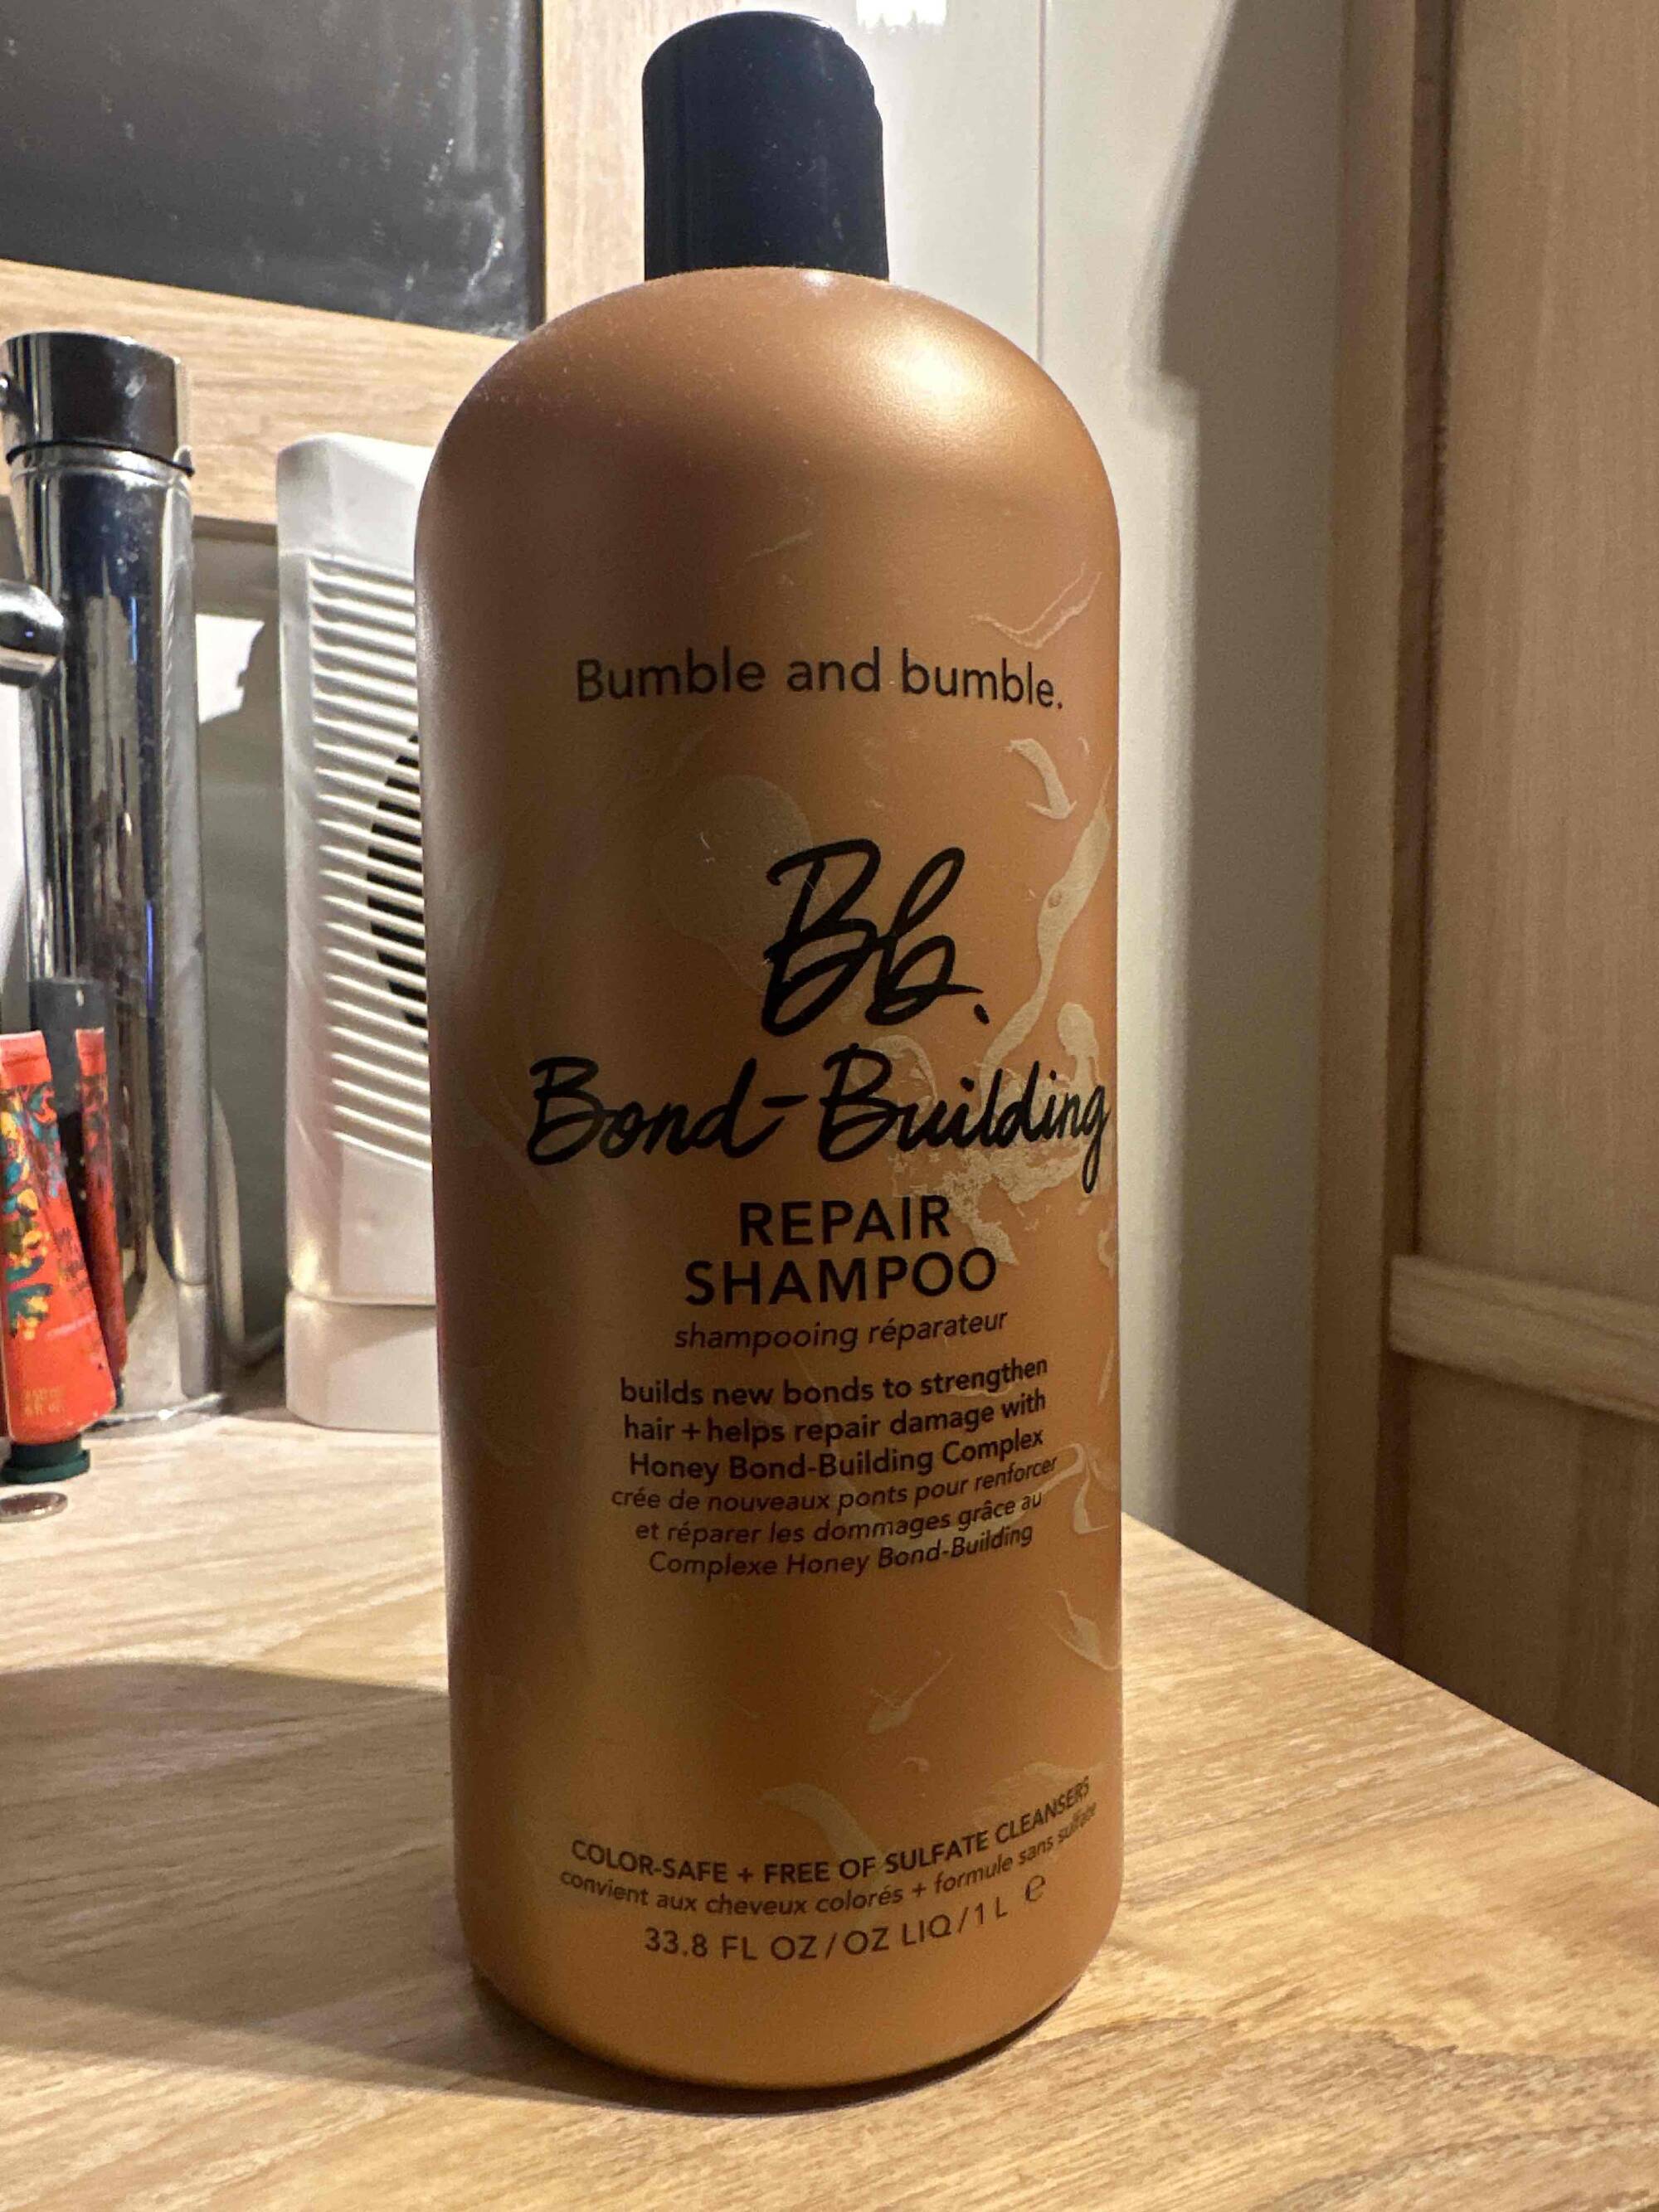 BUMBLE AND BUMBLE - Bond building - Repair shampoo